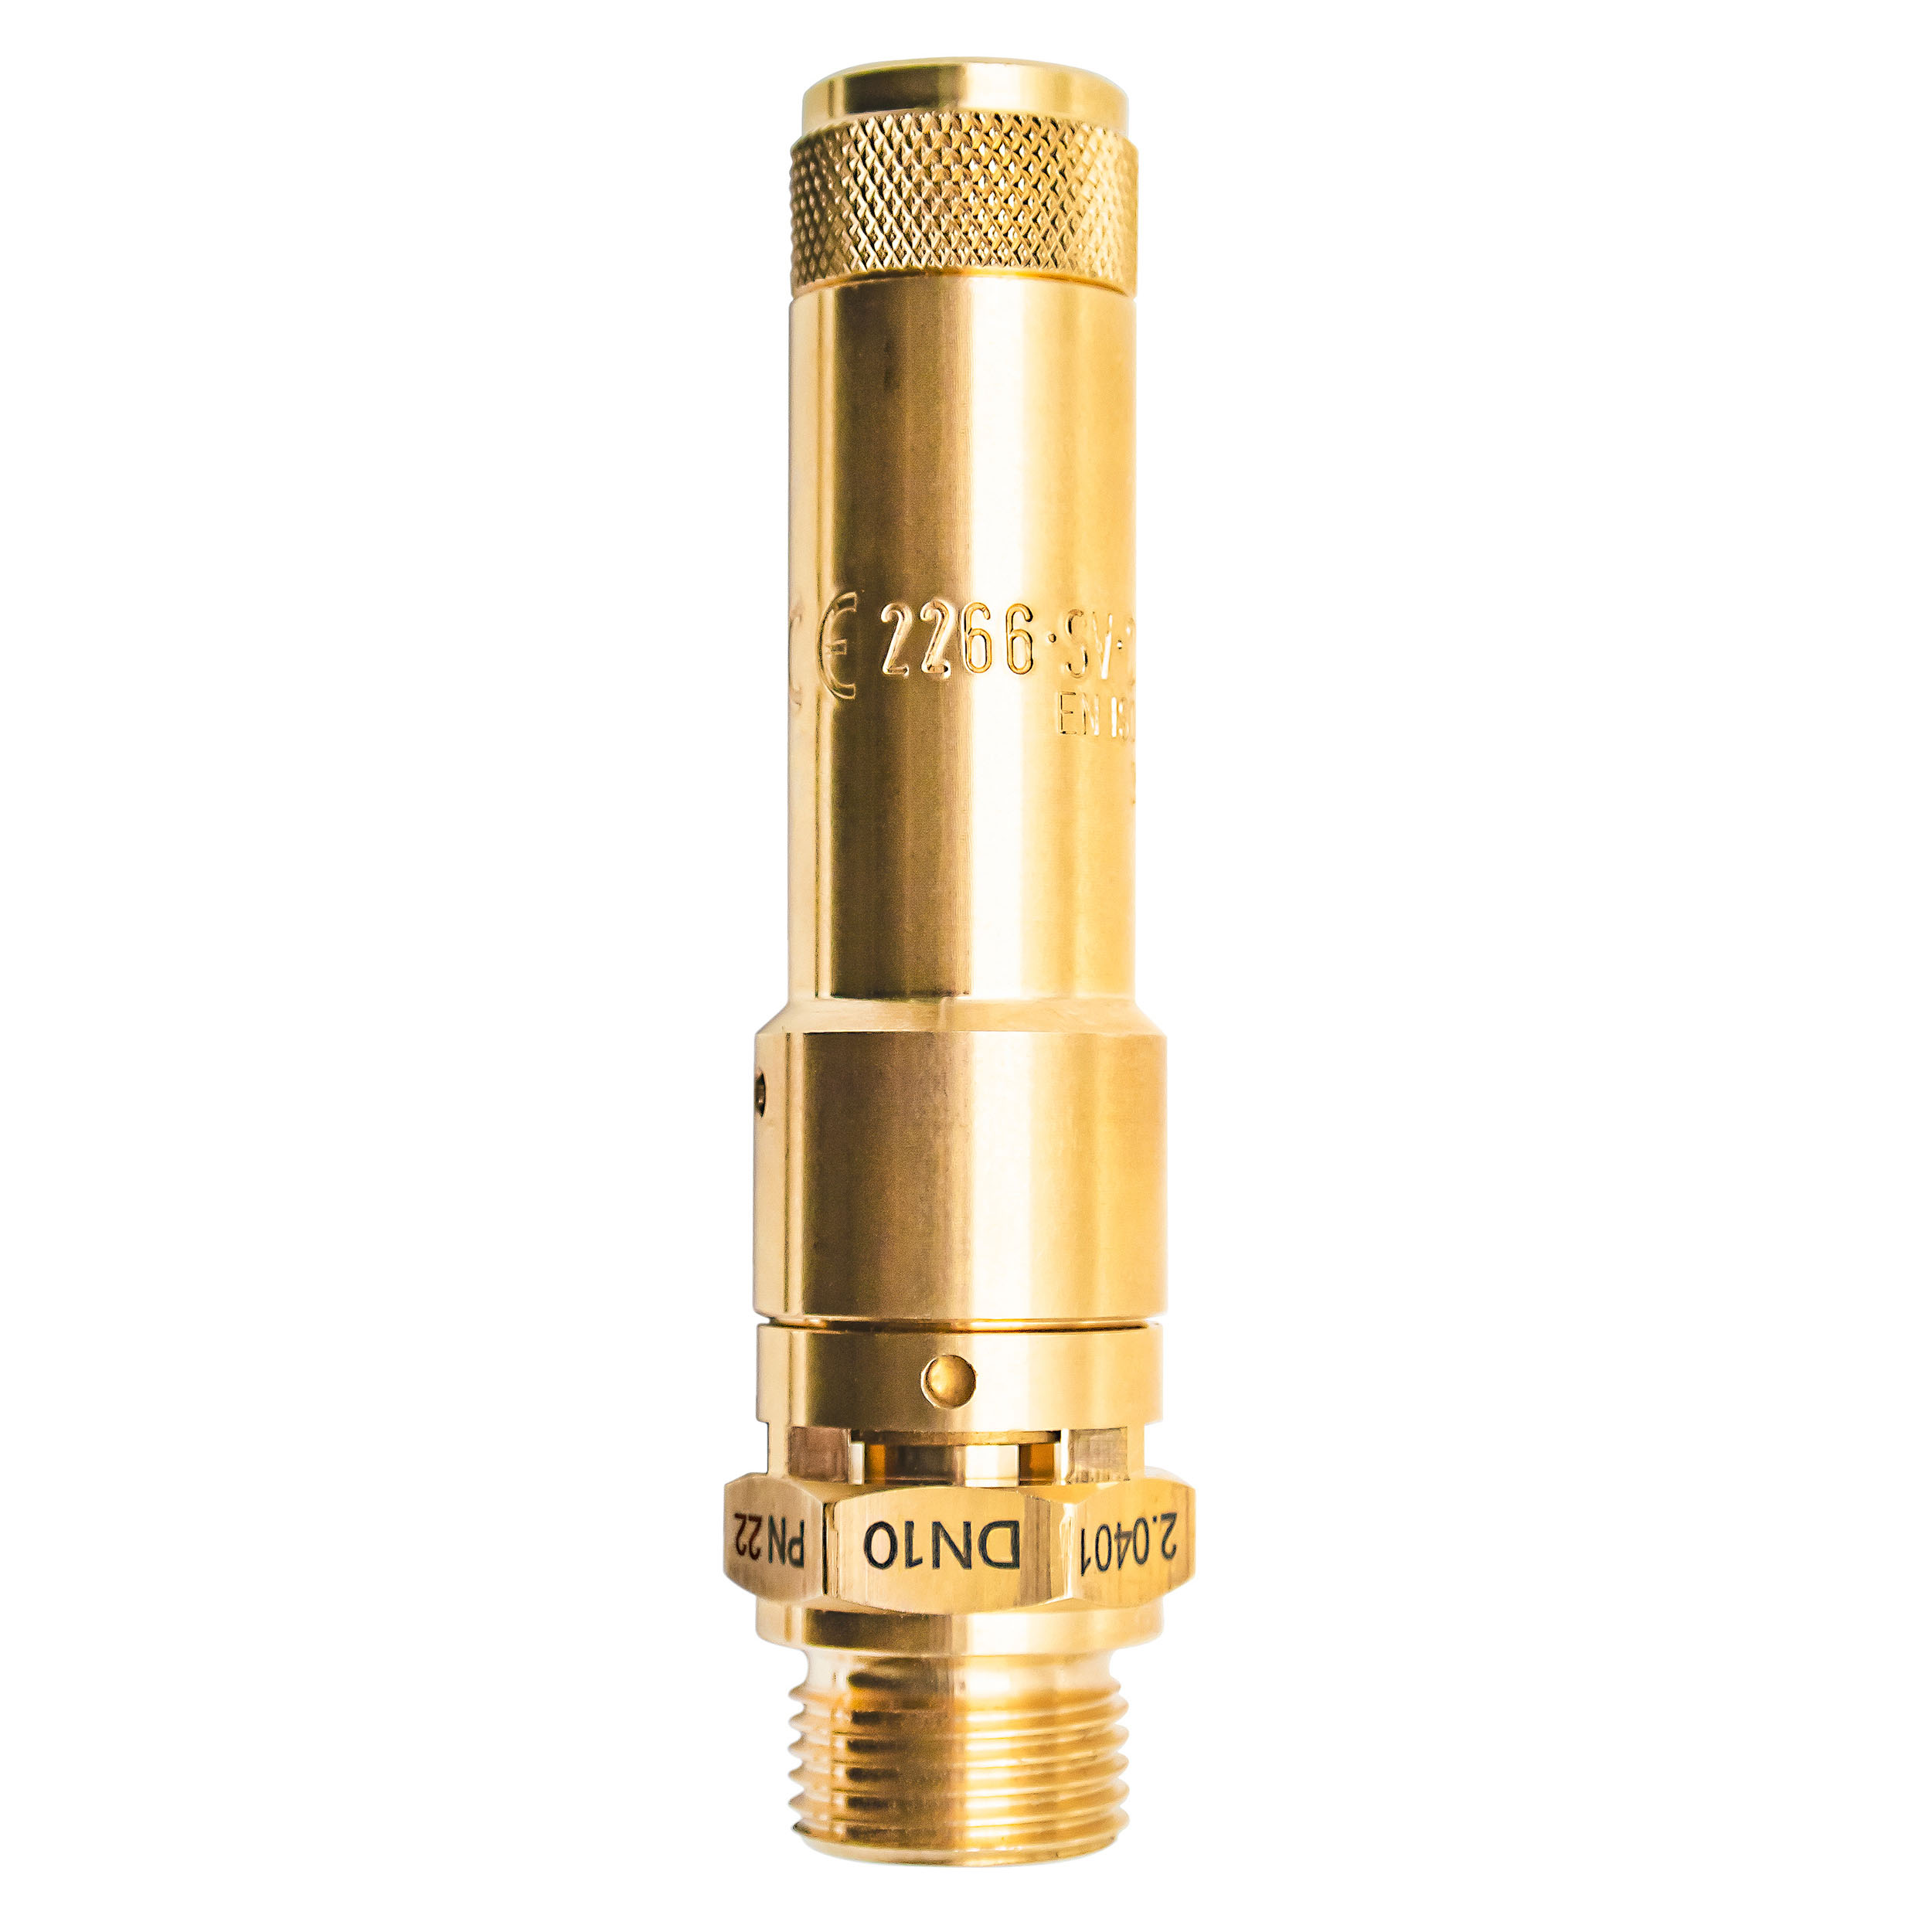 Savety valve component tested DN 10, G½, set pressure: 2.9 bar (42,05 psi)